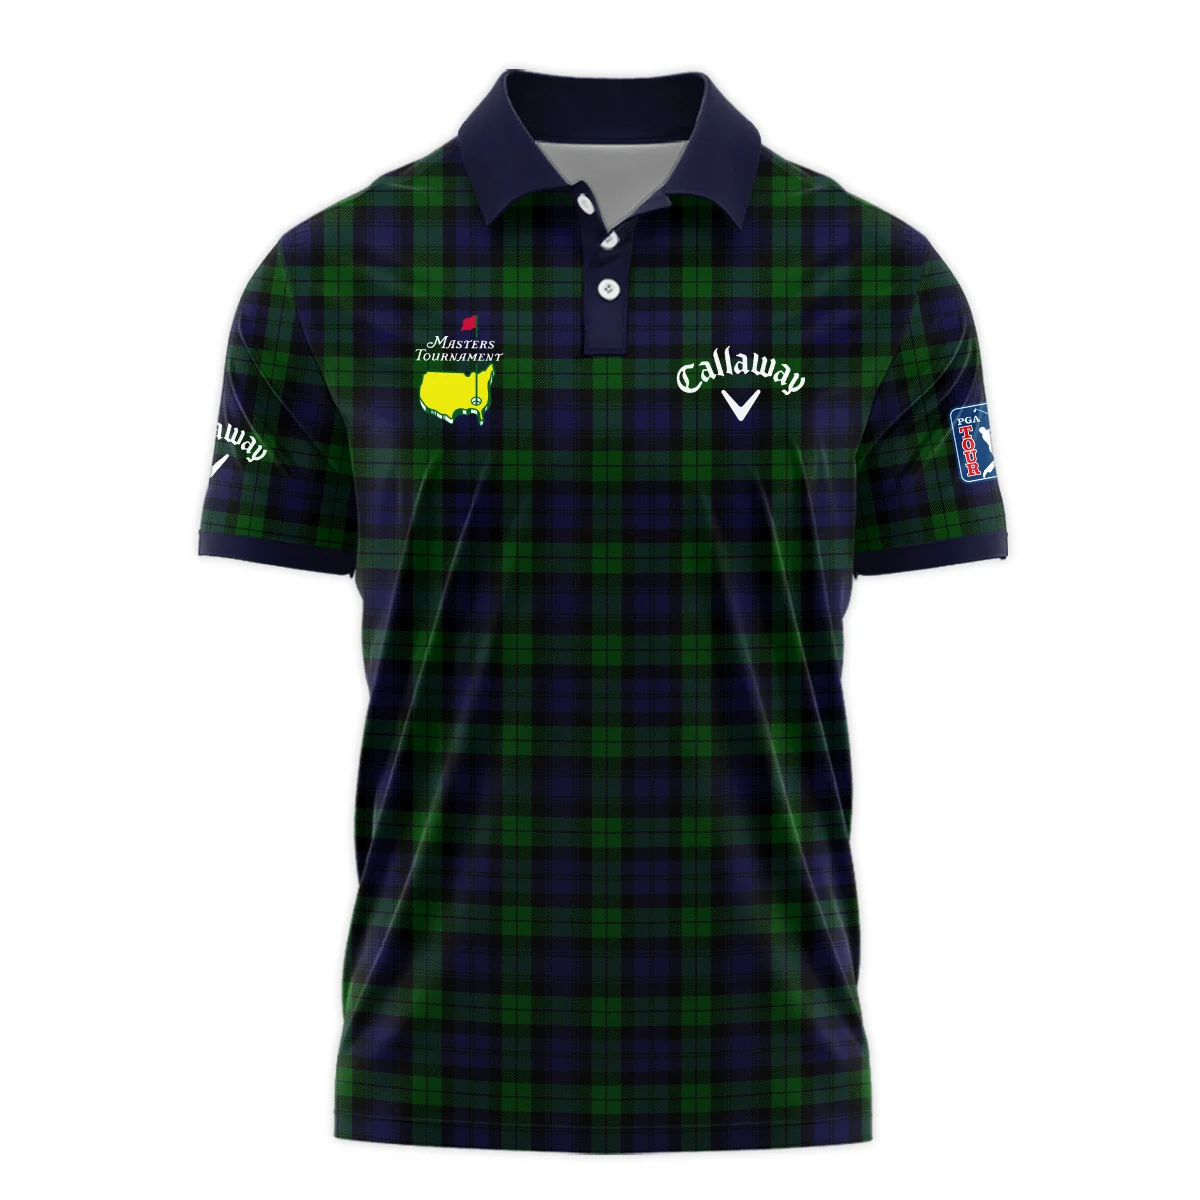 Masters Tournament Callaway Golf Long Polo Shirt Sports Green Purple Black Watch Tartan Plaid All Over Print Long Polo Shirt For Men